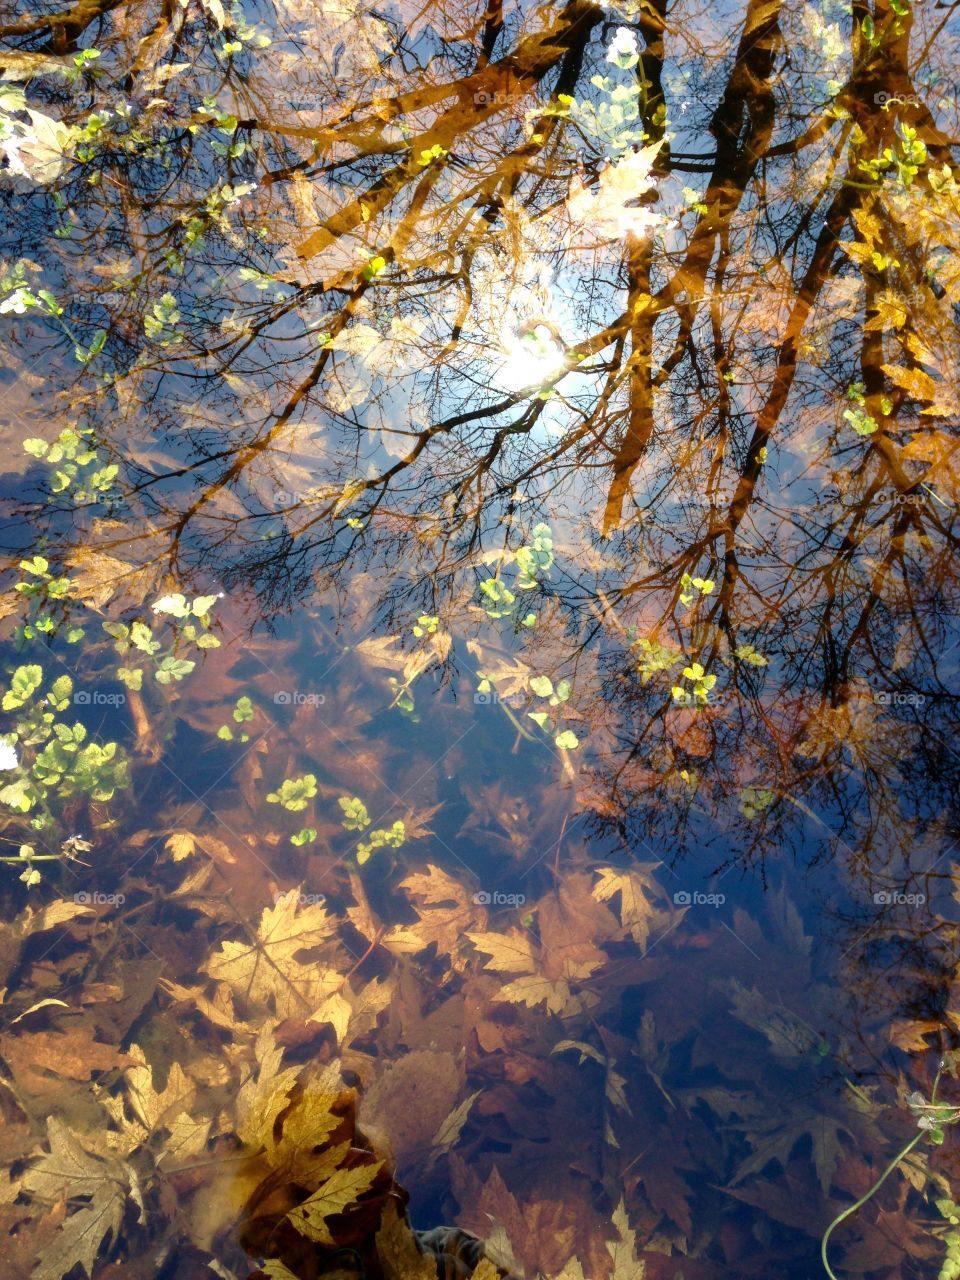 Autumn leaves underwater